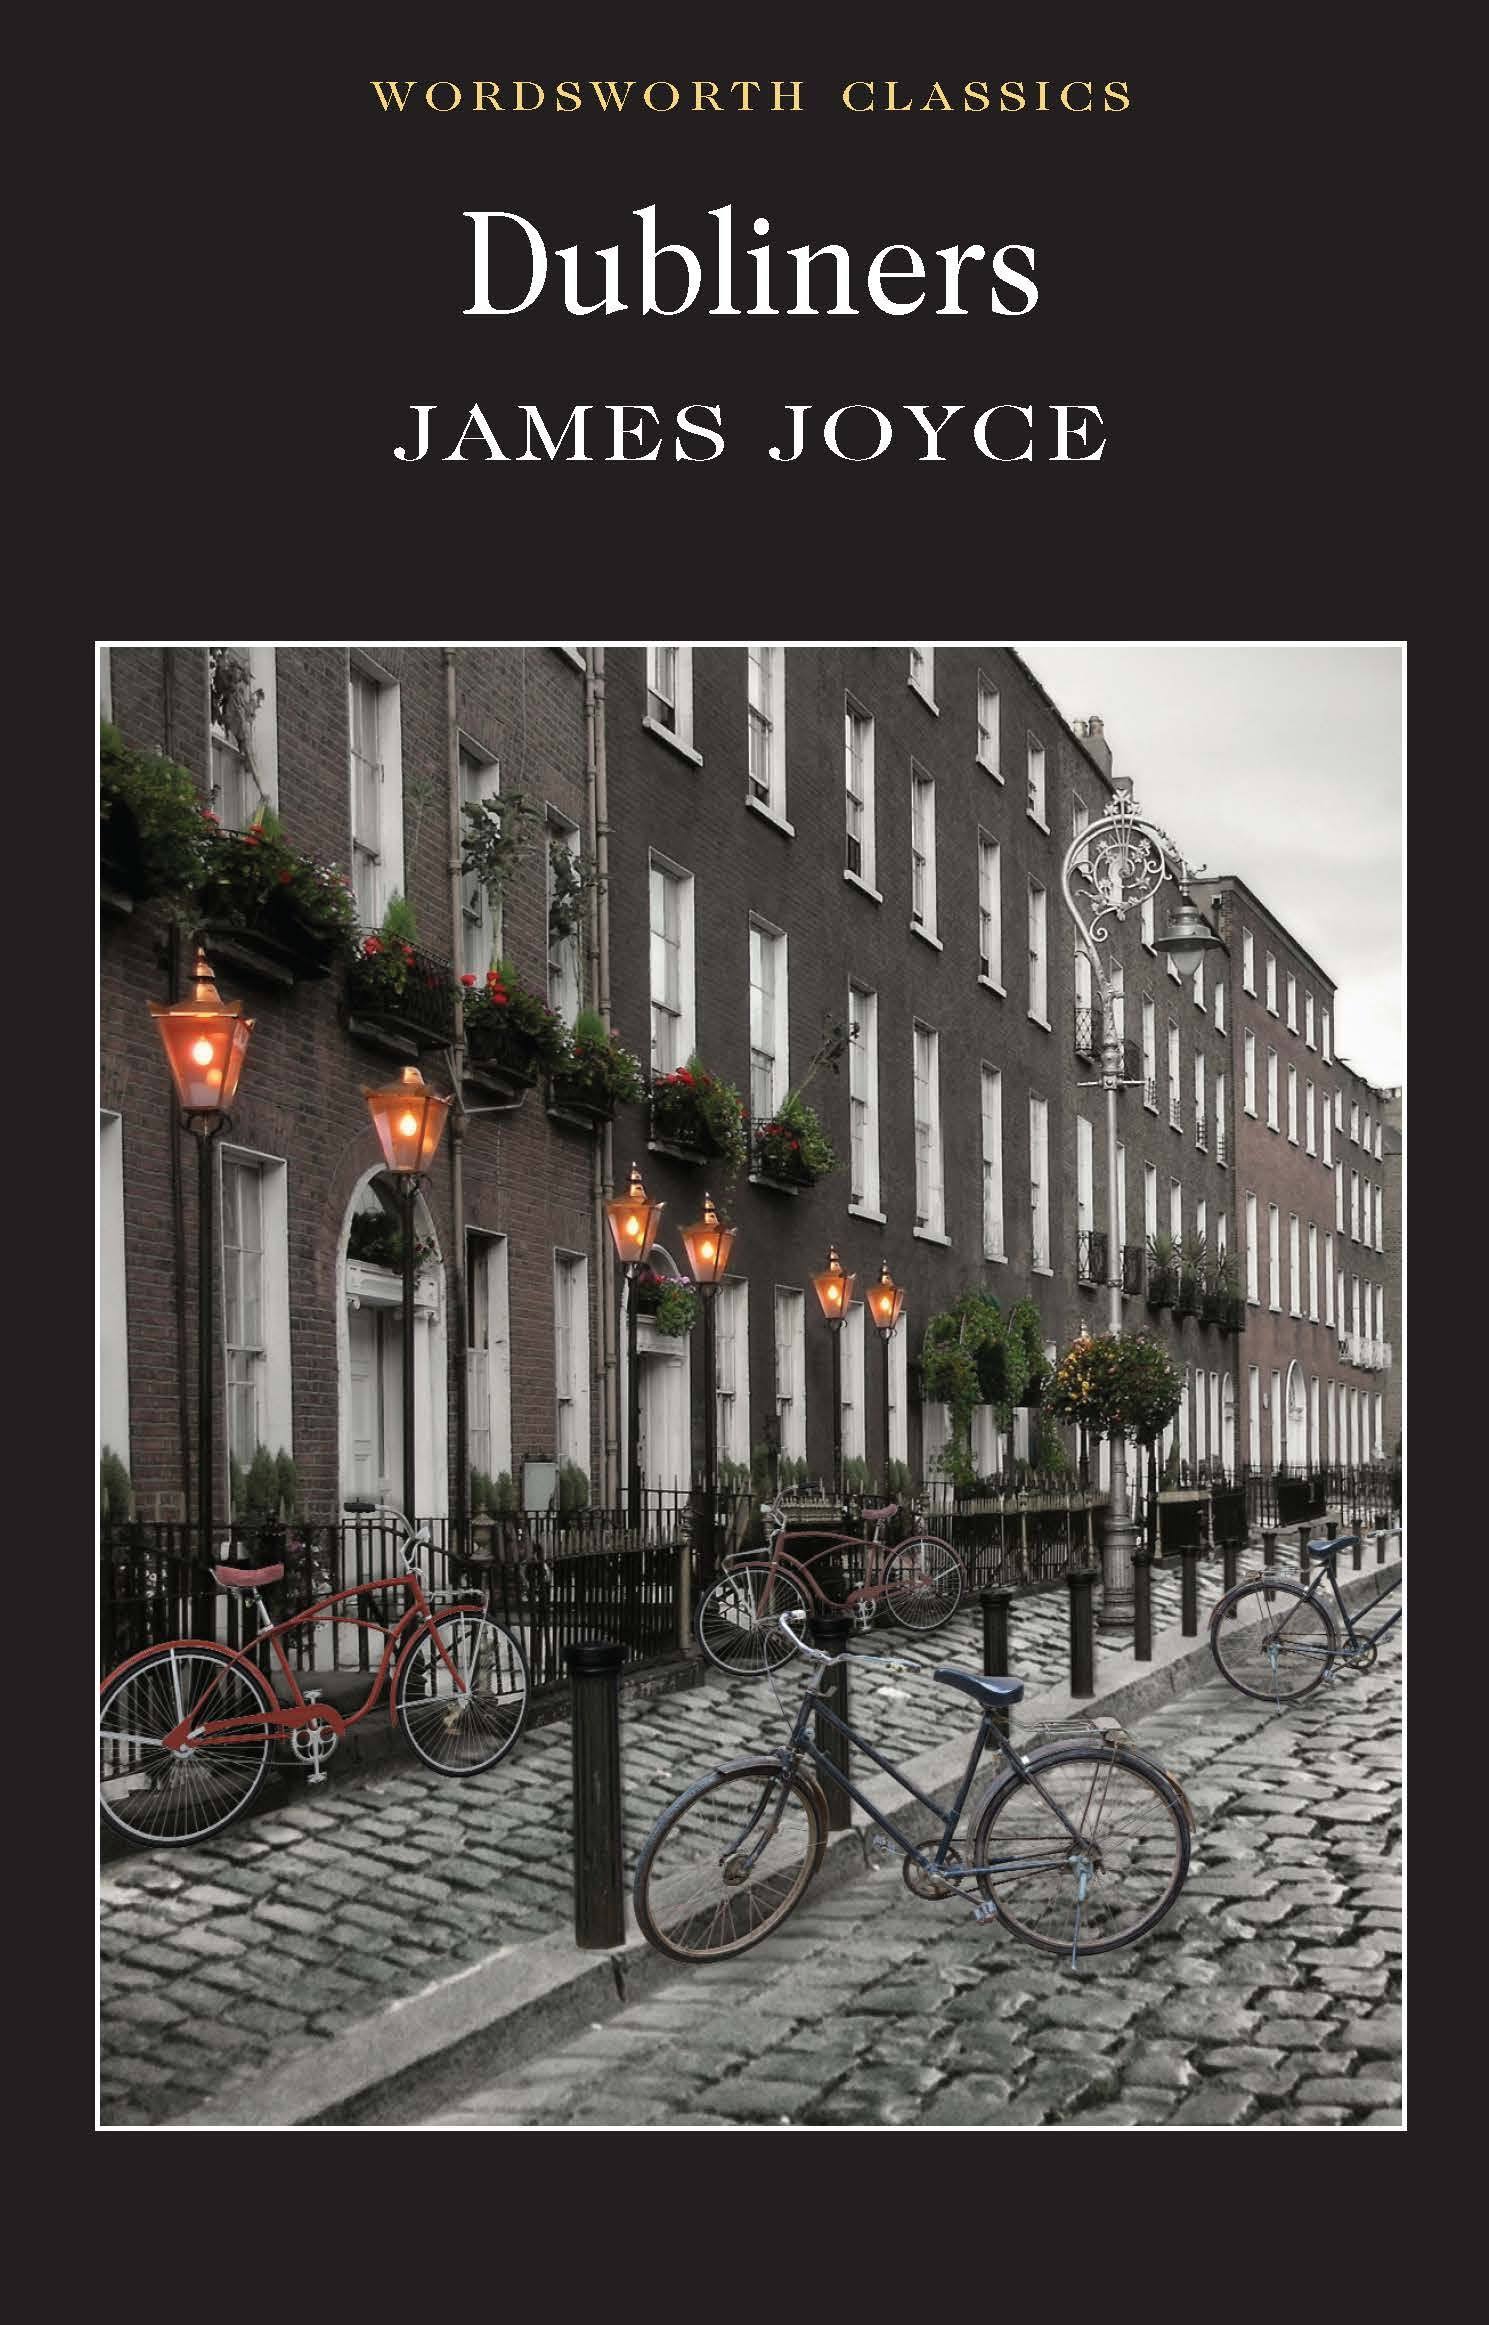 The Dubliners - James Joyce